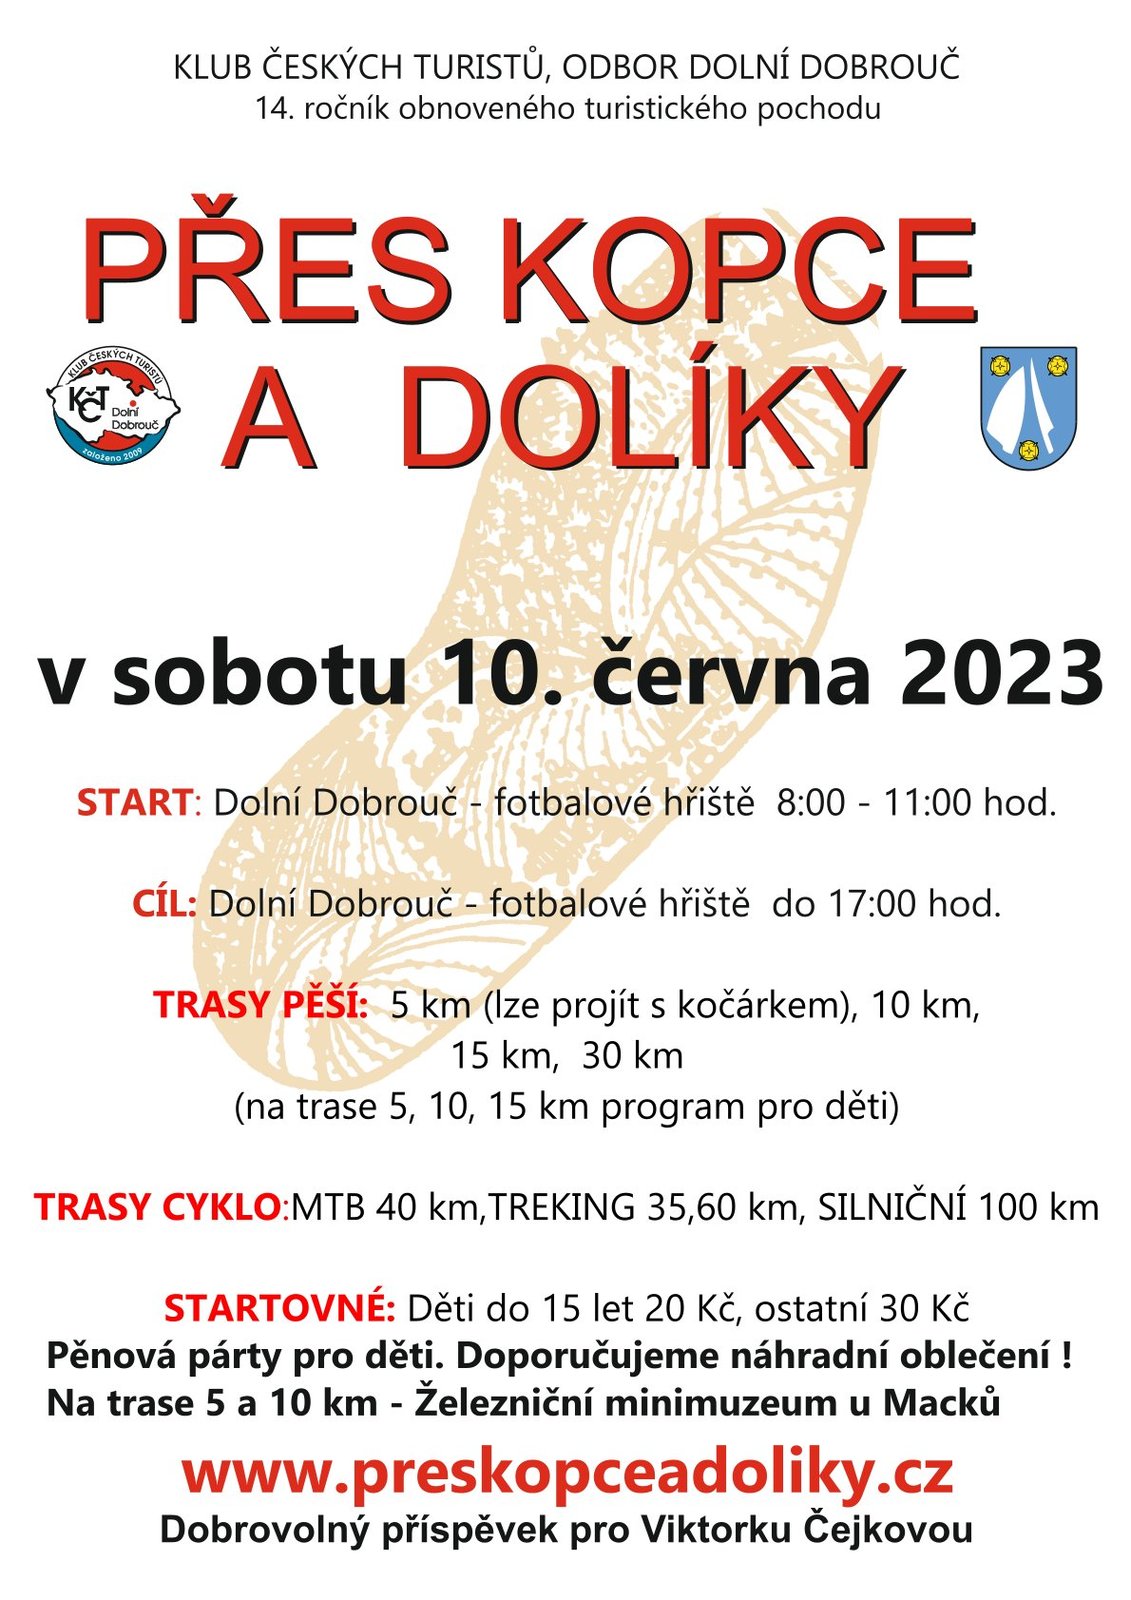 KopceDoliky2023_A4-v15.jpg